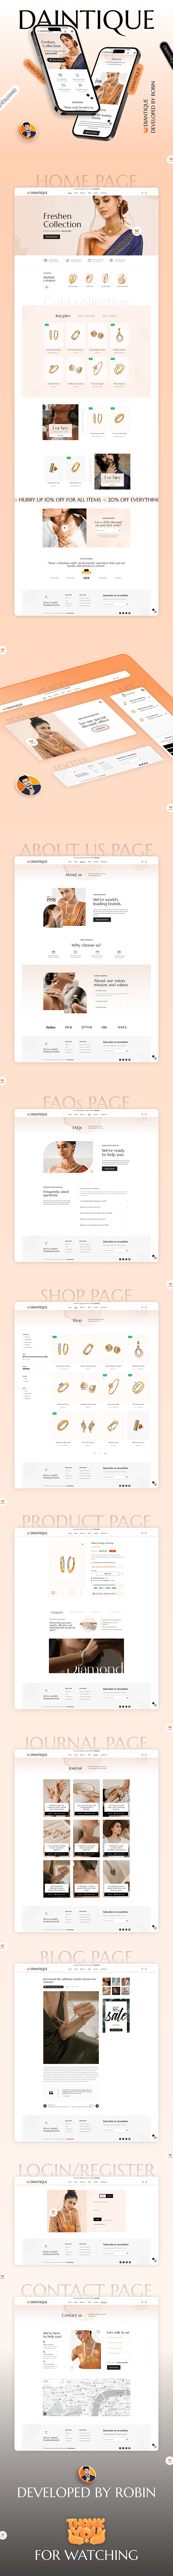 Diantique - Jewelry Ecommerce Website